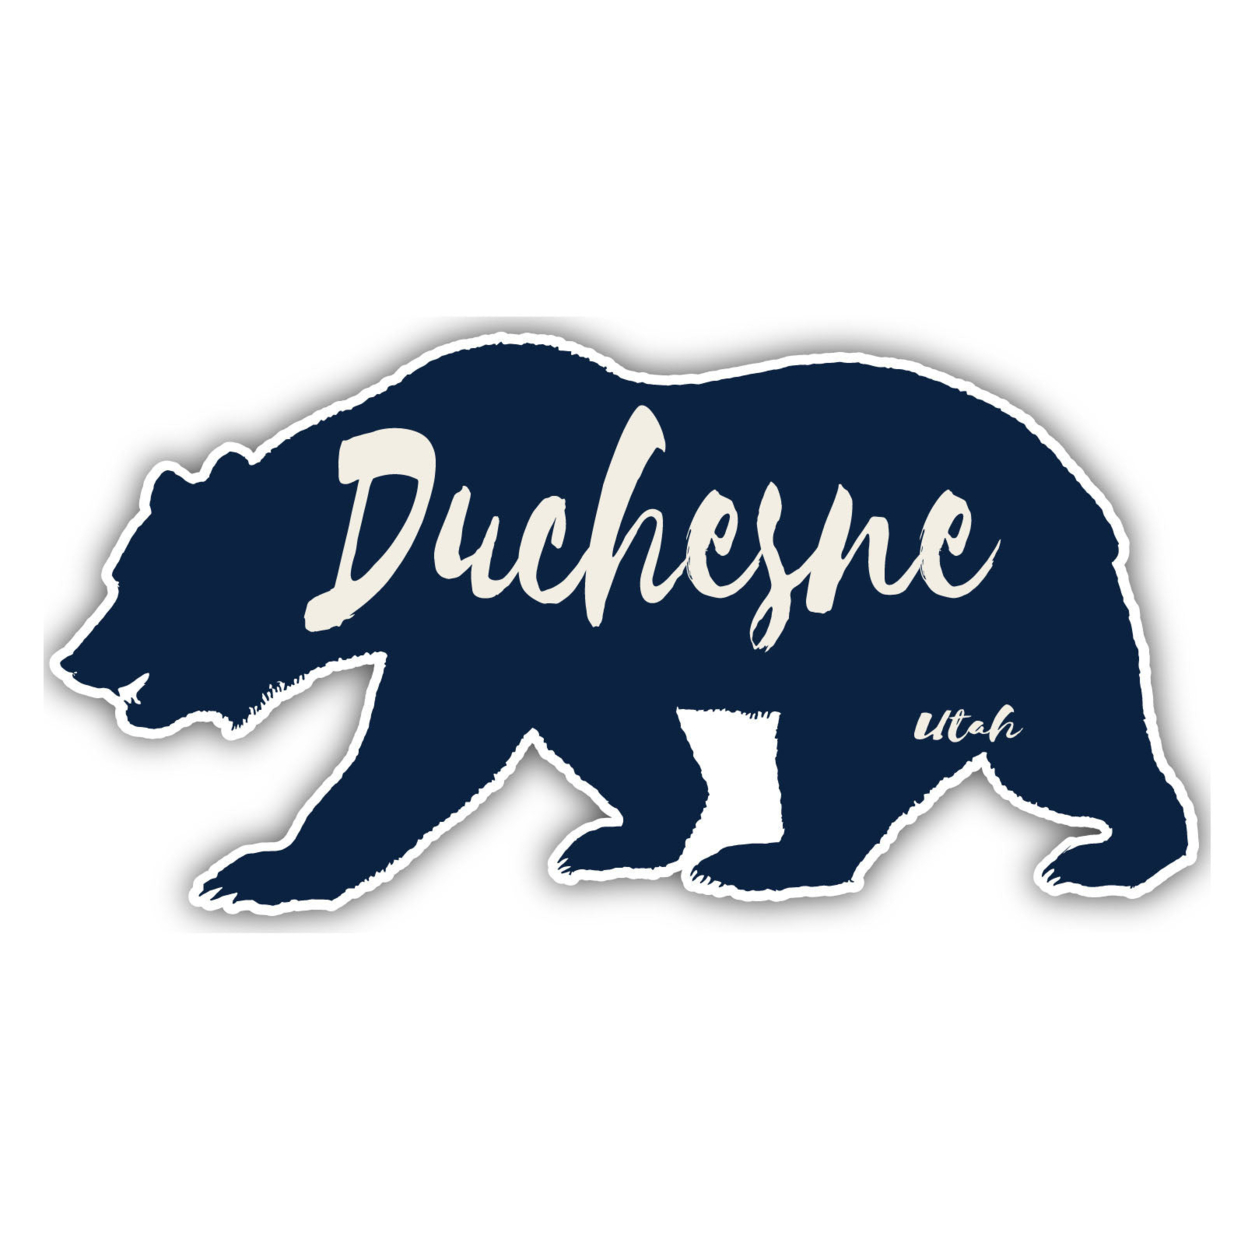 Duchesne Utah Souvenir Decorative Stickers (Choose Theme And Size) - Single Unit, 12-Inch, Bear